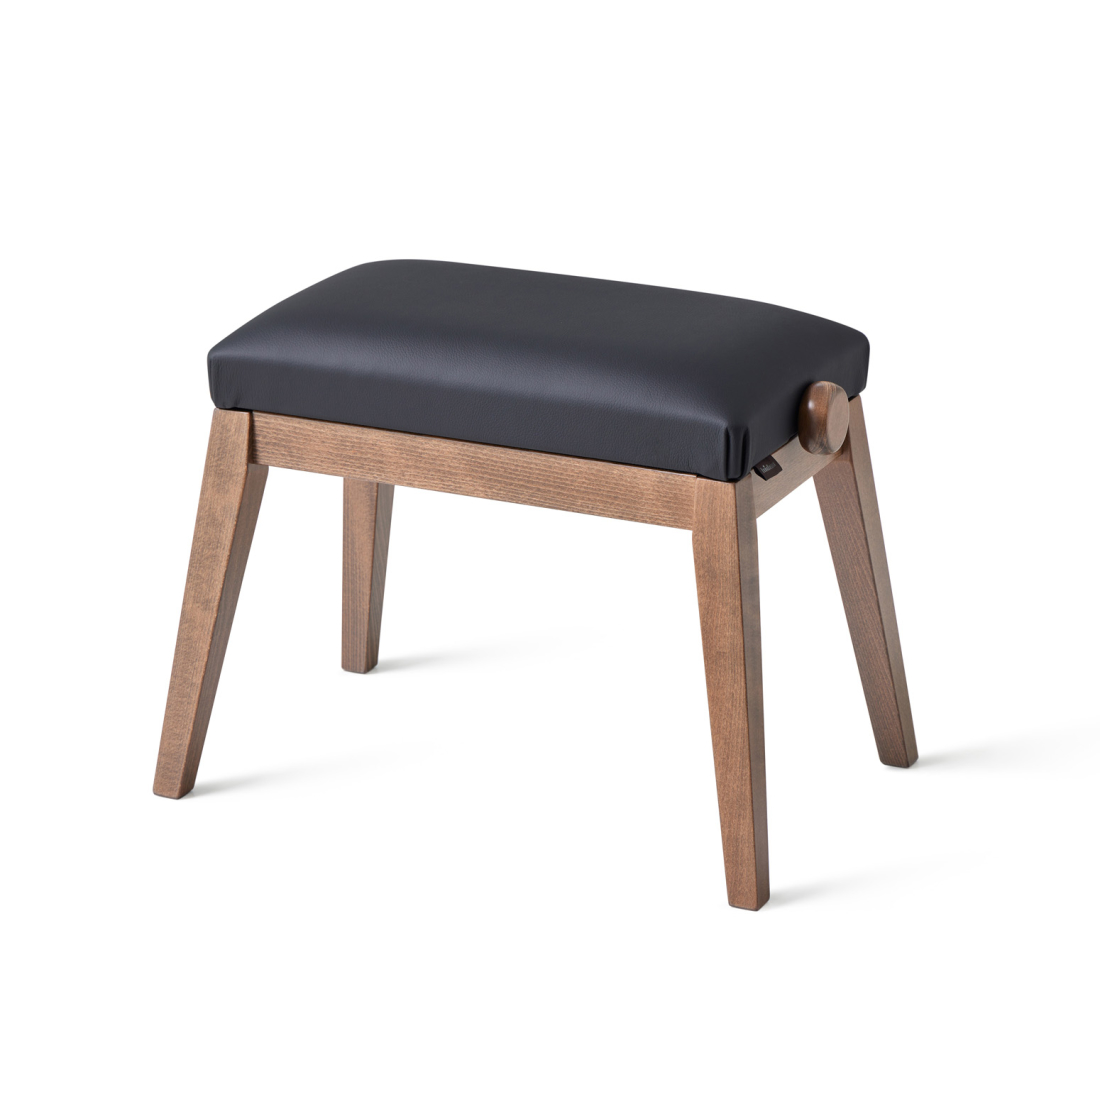 Walnut Adjustable Height Piano Bench - Black Cushion